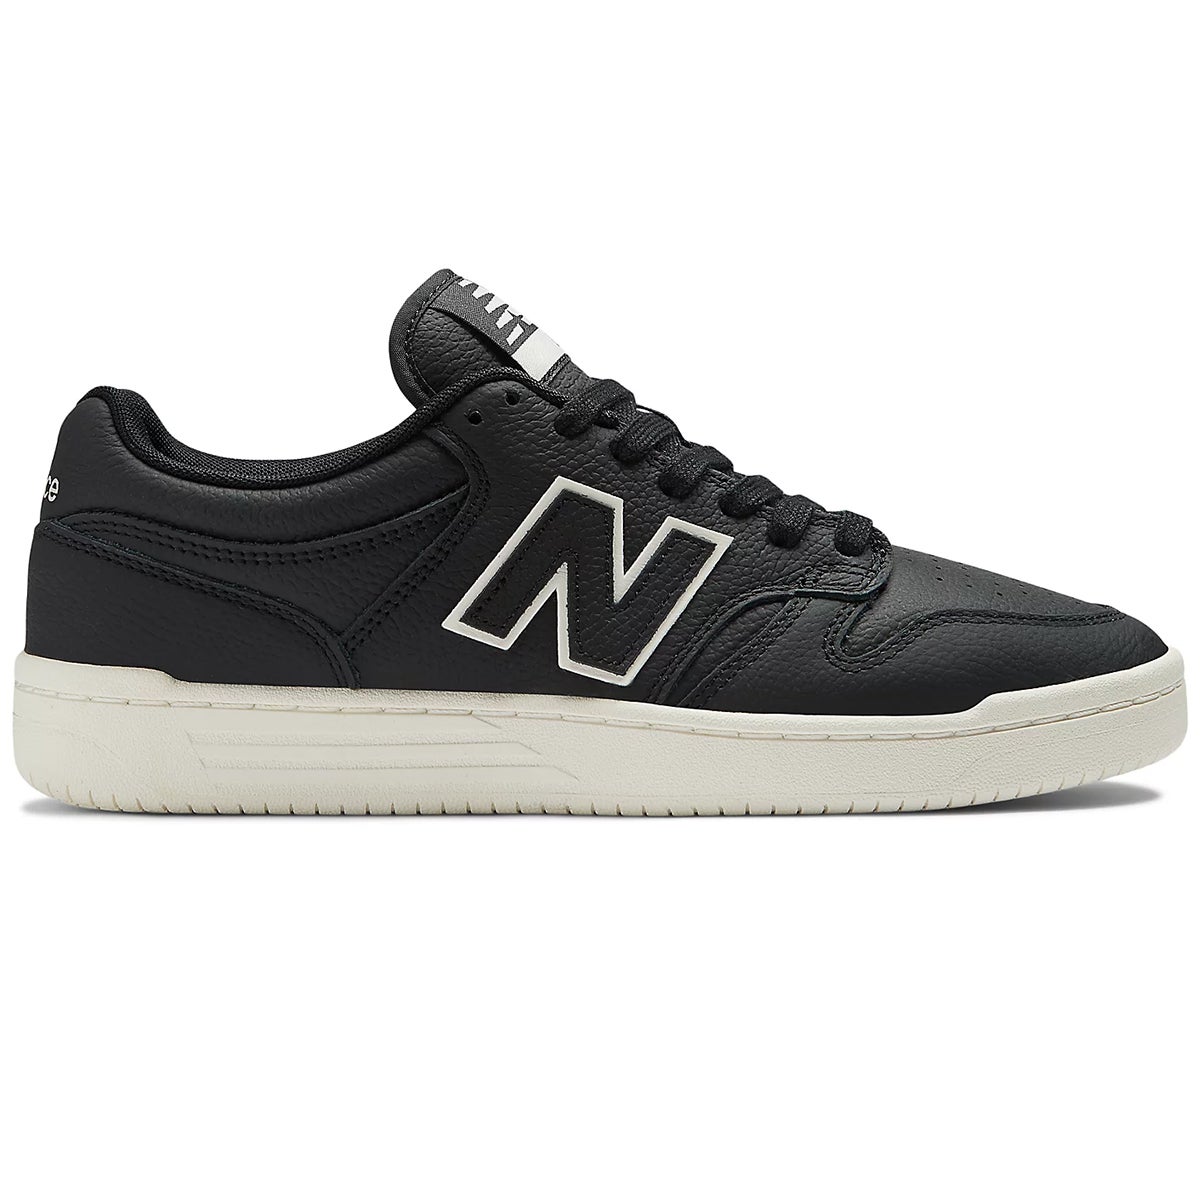 NB Numeric 480 Shoe in Black/White | Boardertown